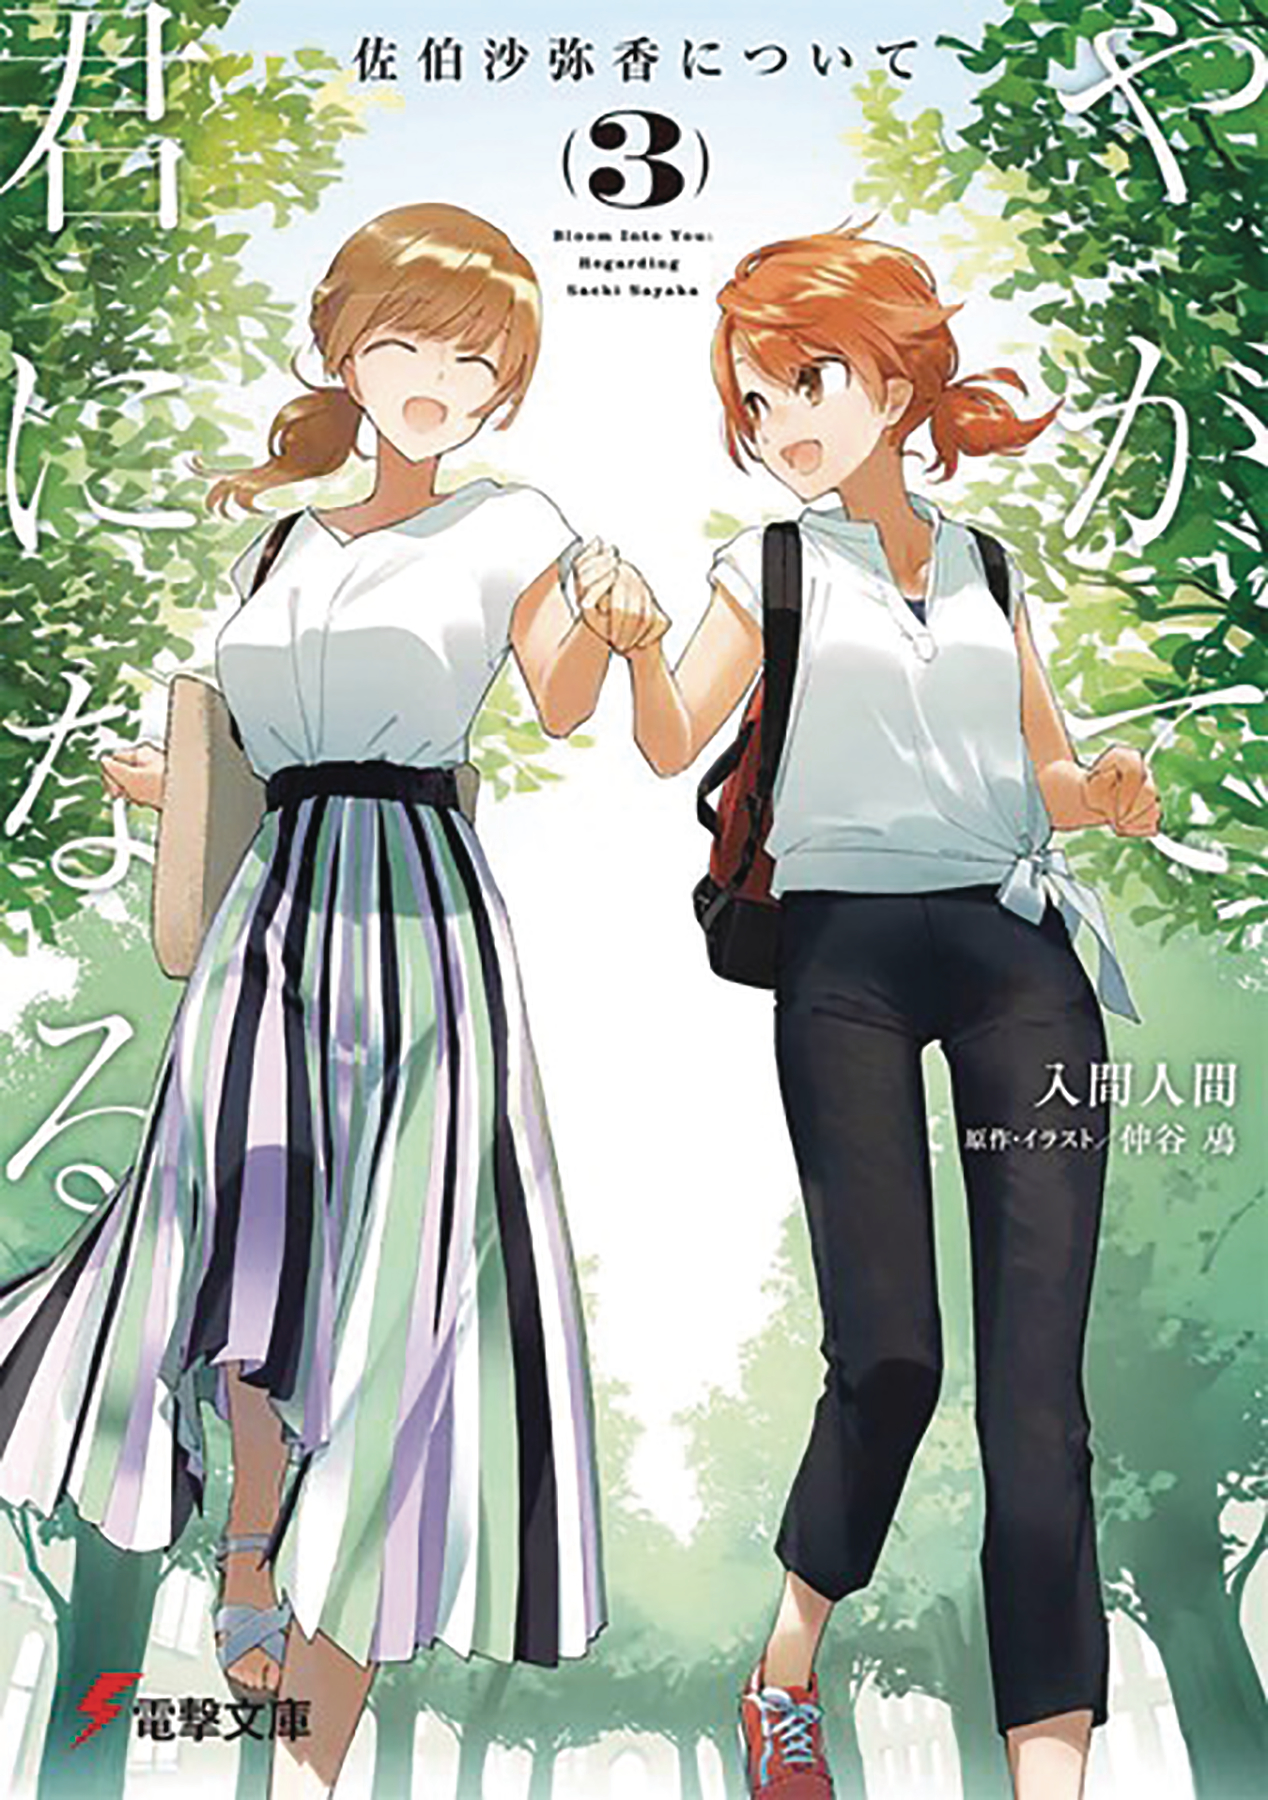 Bloom Into You Light Novel Volume 3